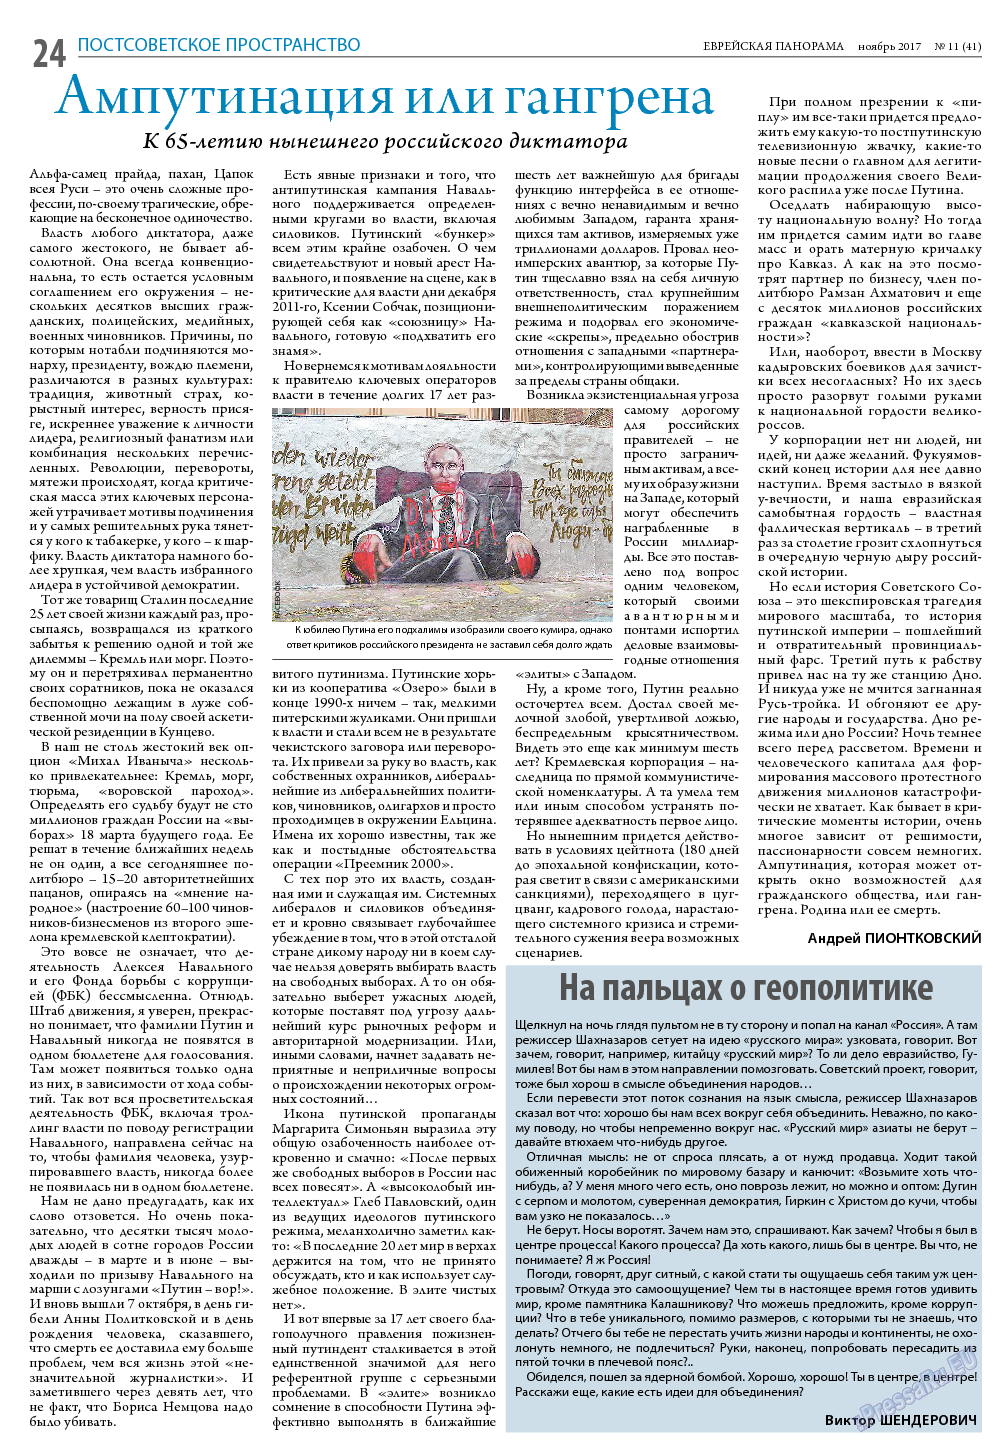 Еврейская панорама, газета. 2017 №11 стр.24